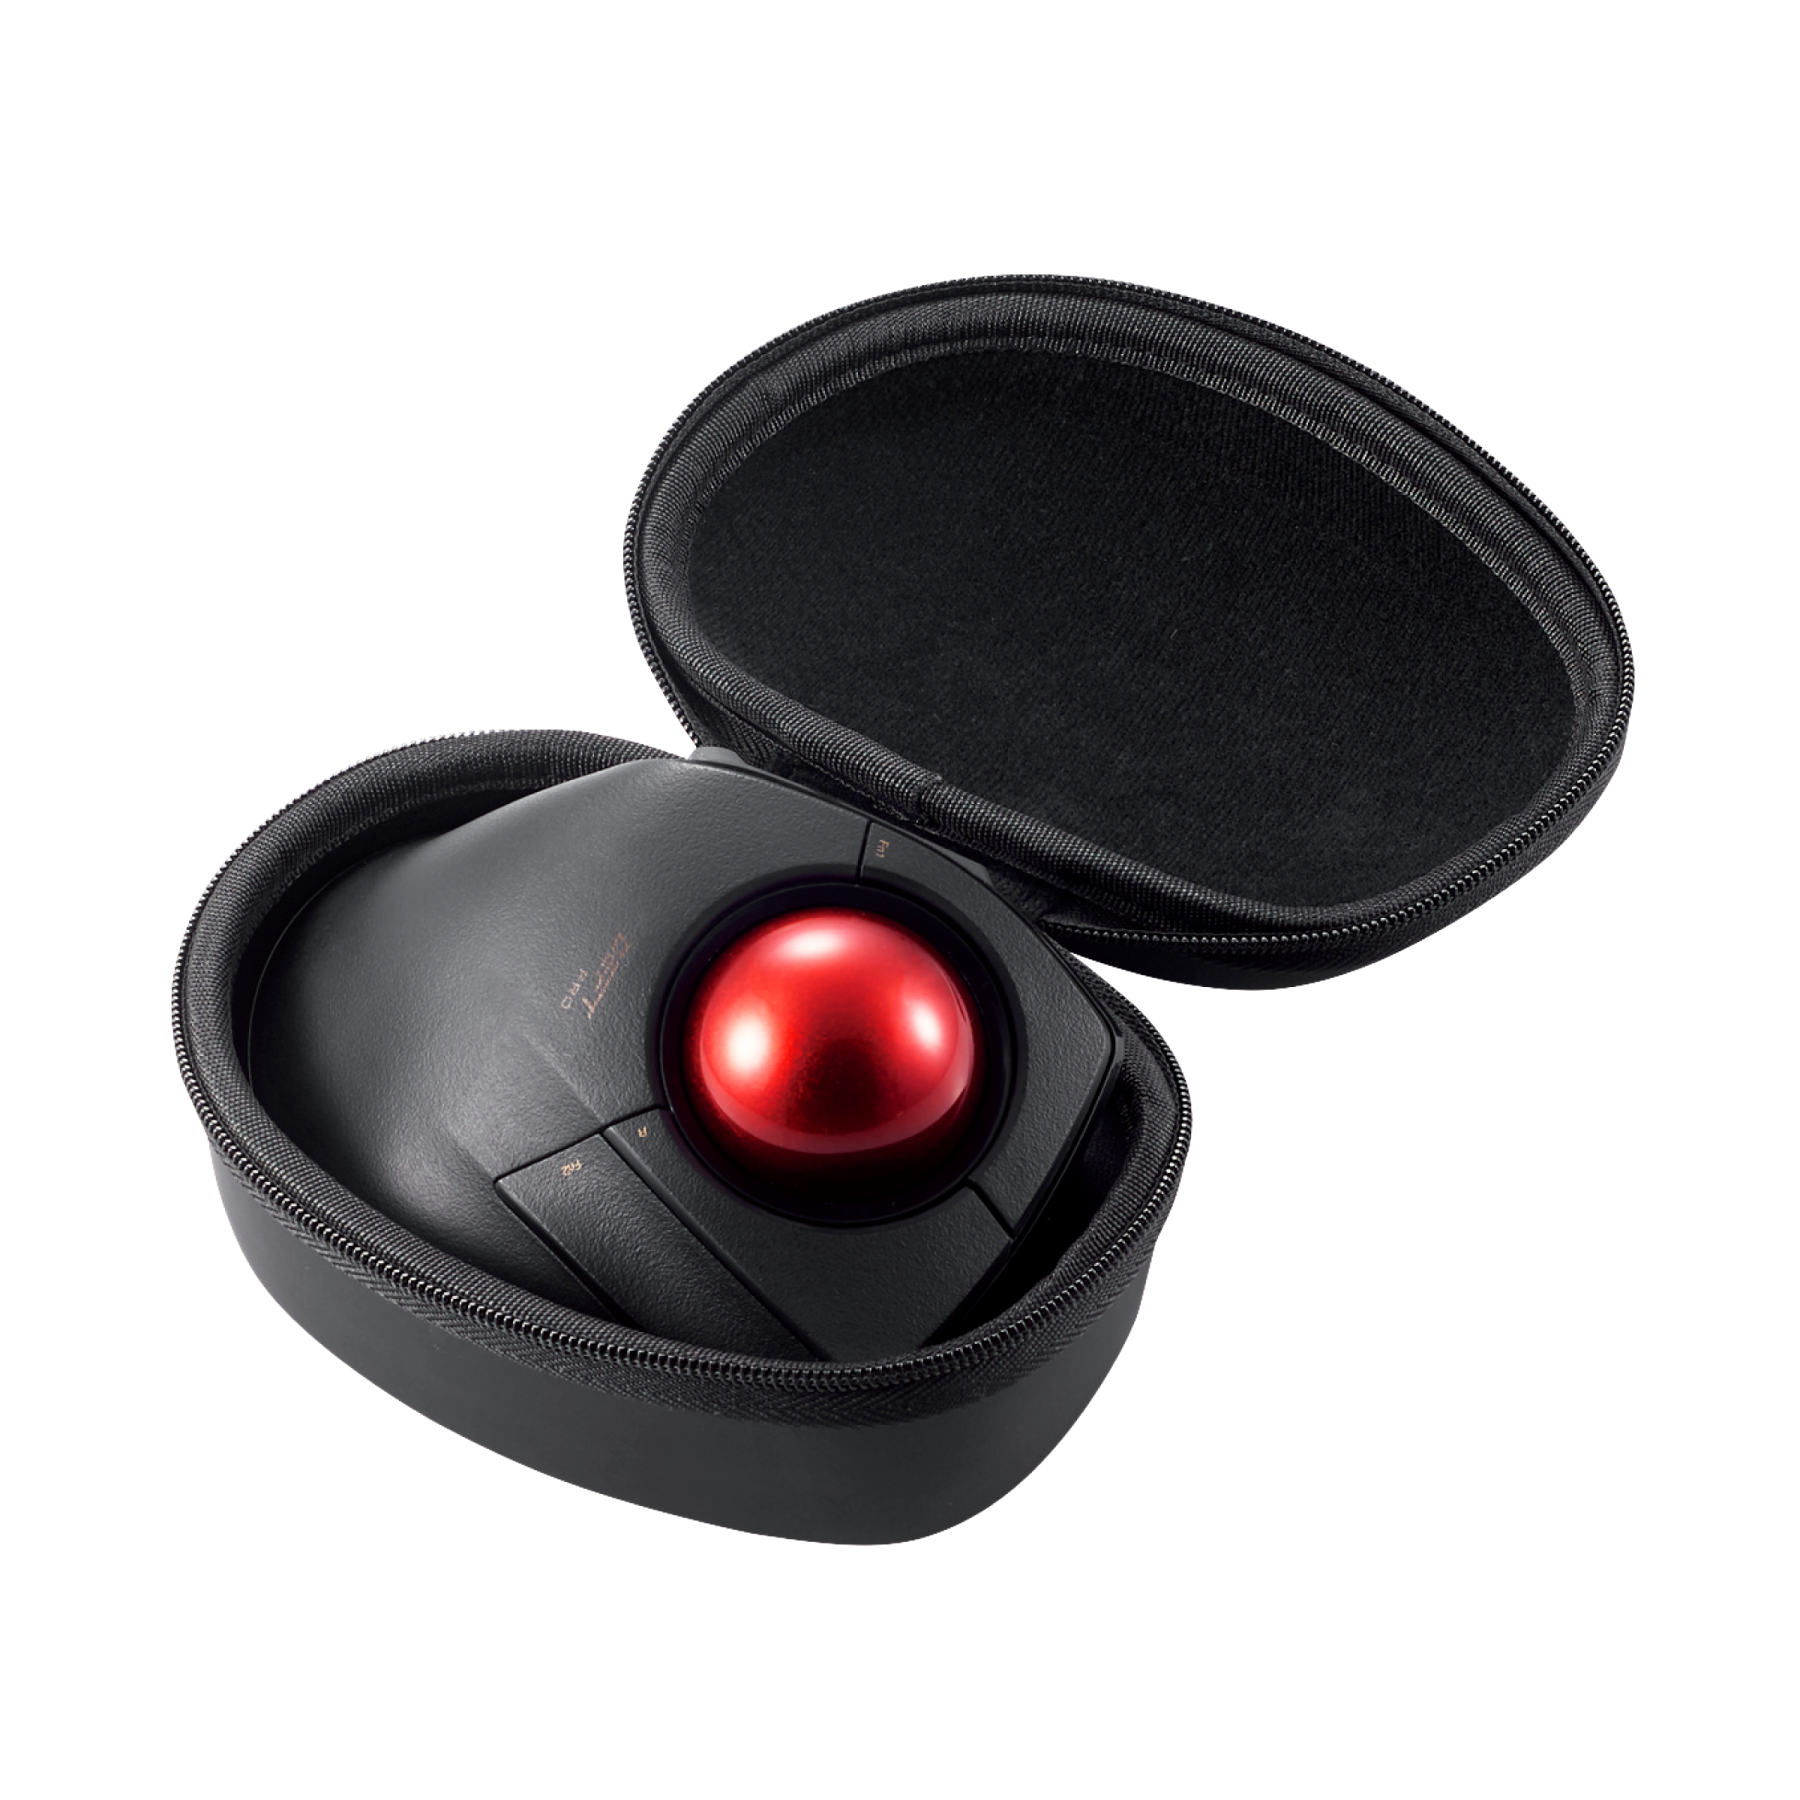 DEFT Pro Trackball Mouse Case